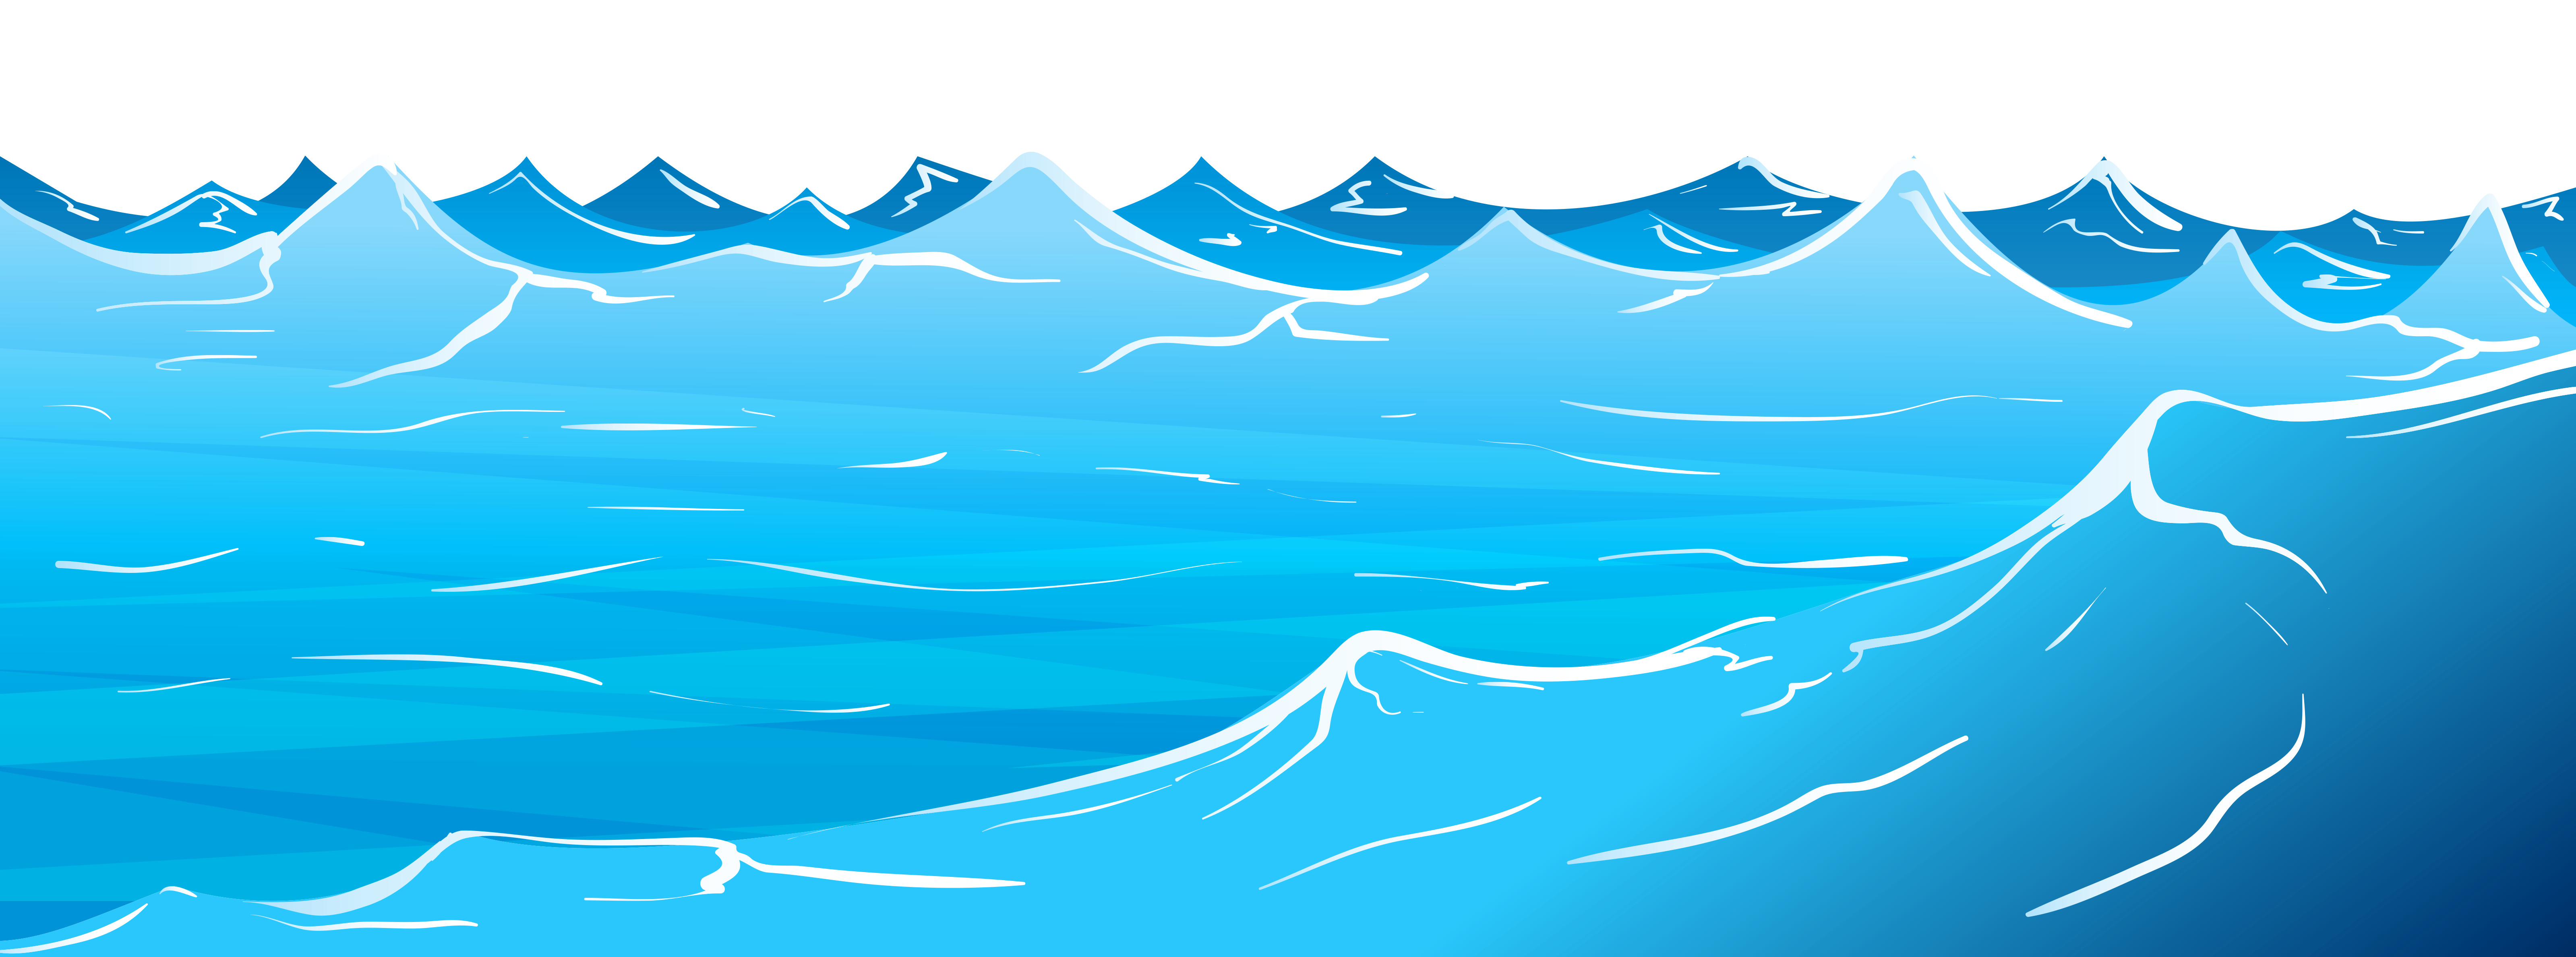 Waves water wave border .